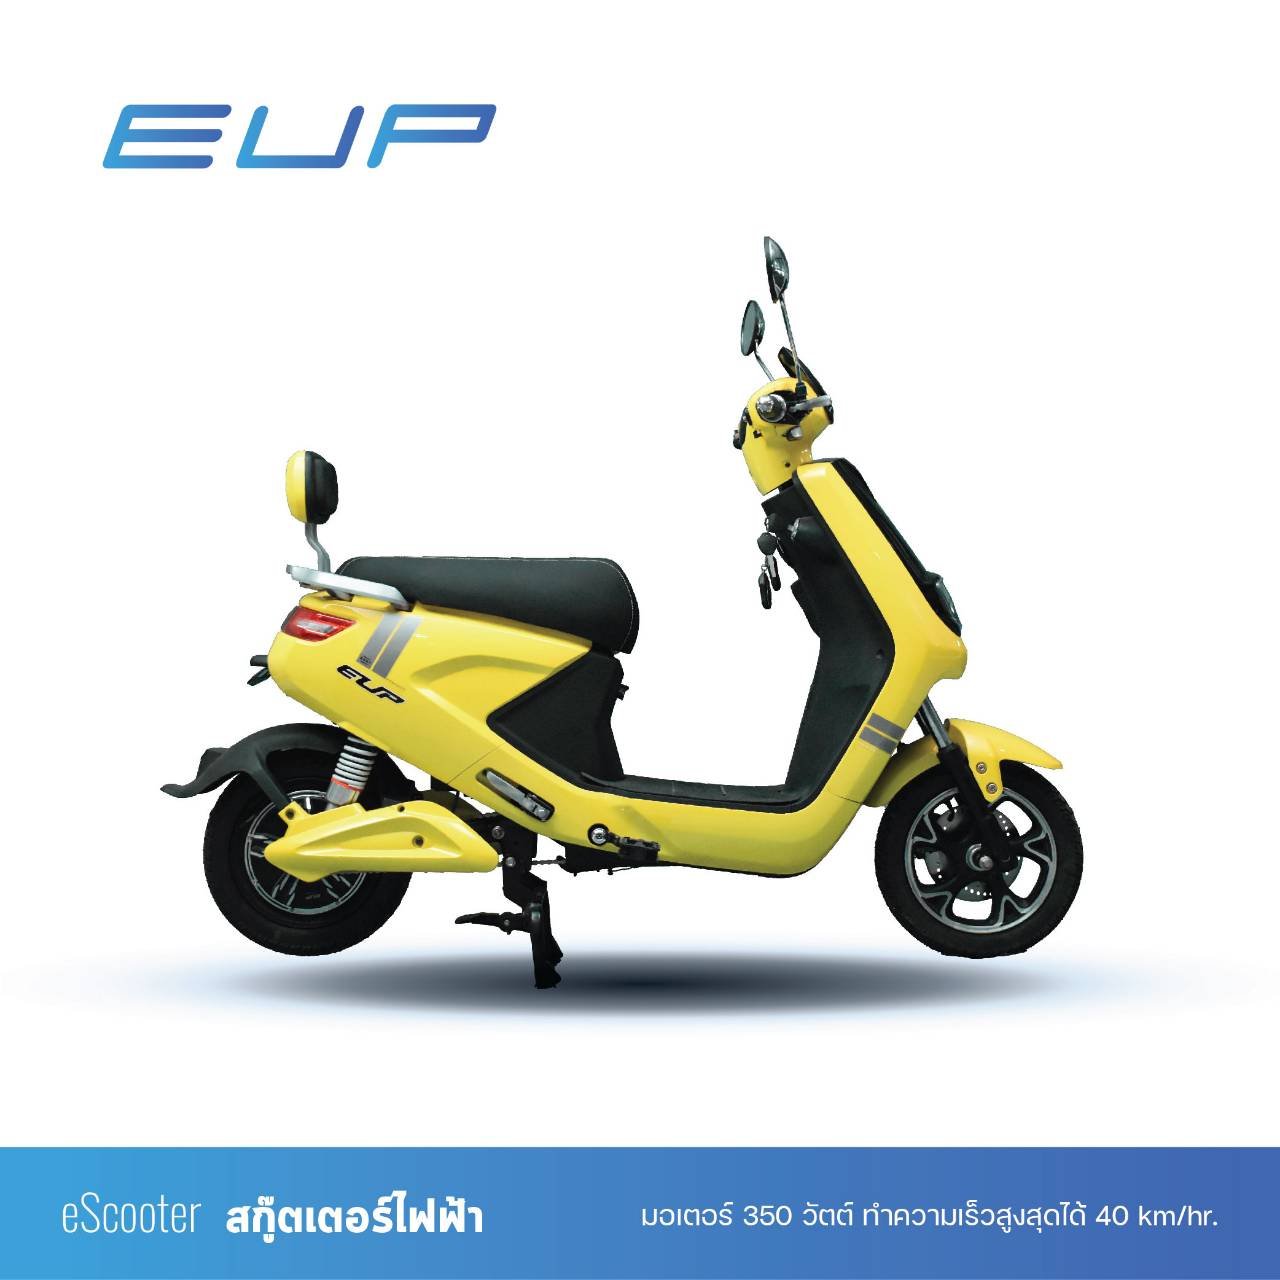 EUP E-SCOOTER Electric bikes Samui Thailand